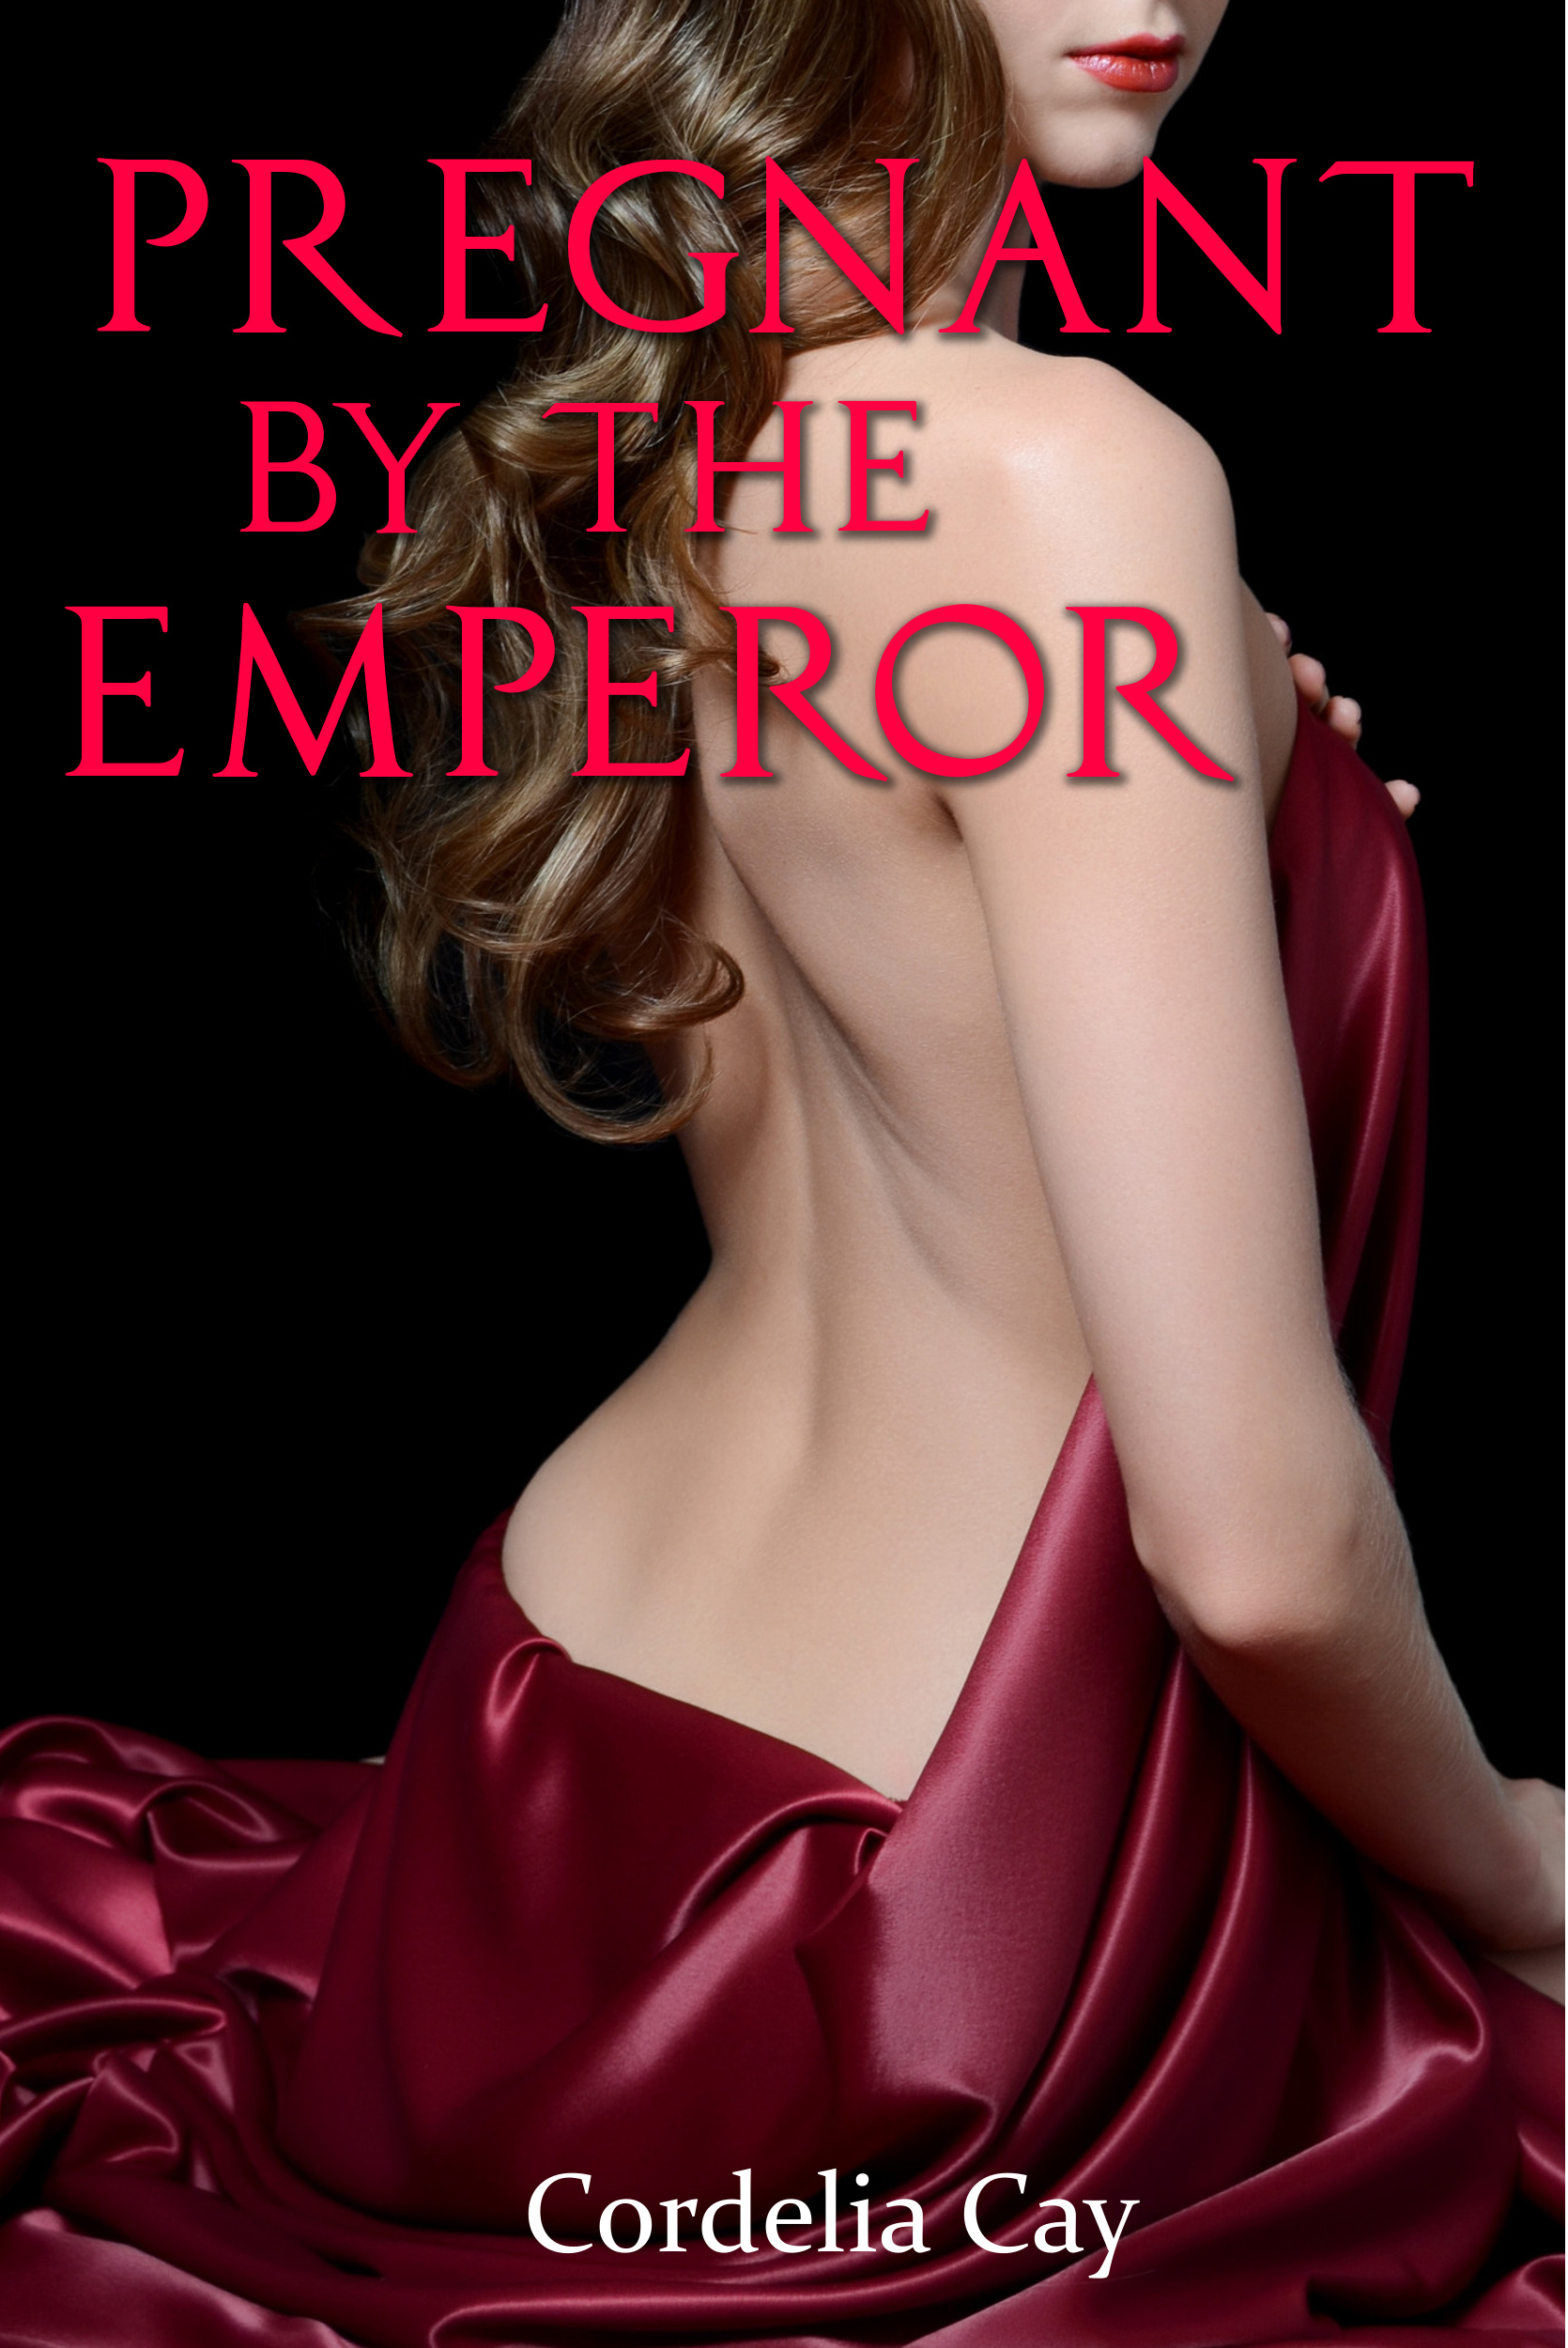 Pregnant by the Emperor (Impregnation Erotica), an Ebook by Cordelia Cay